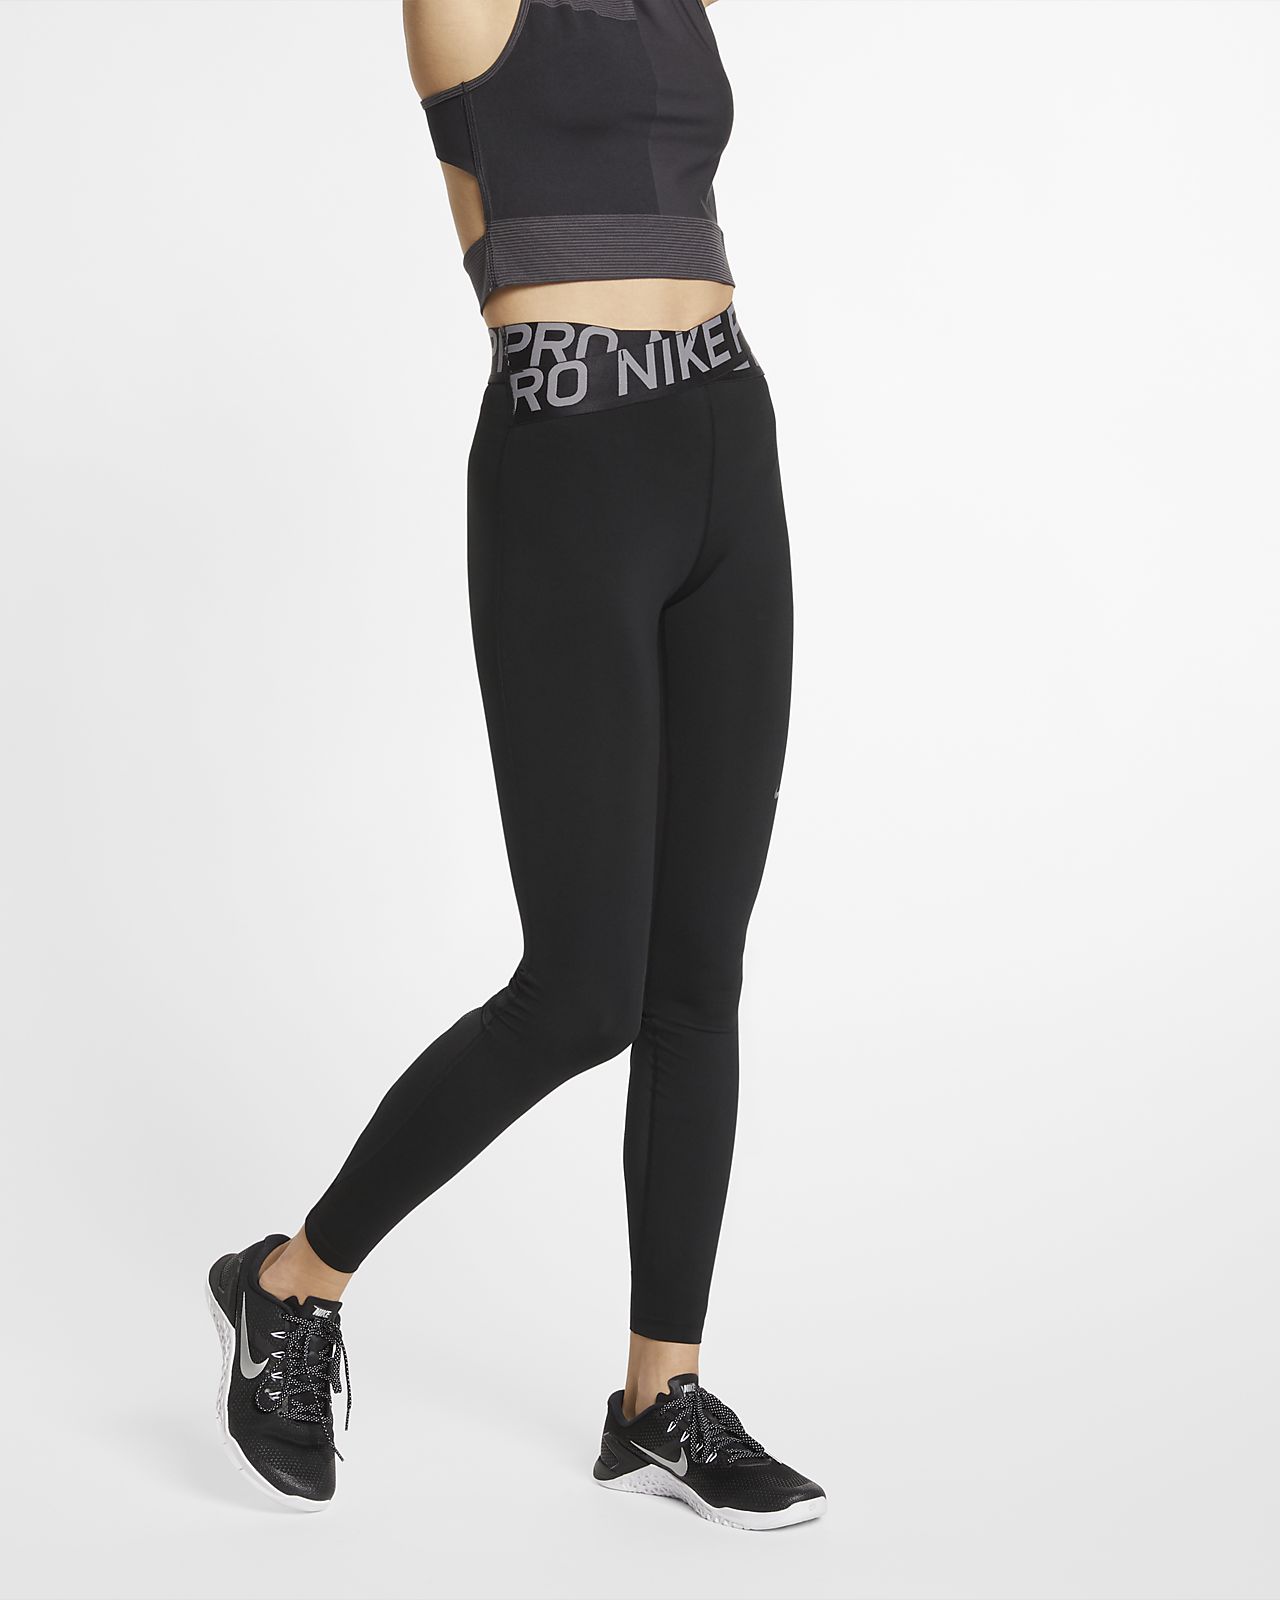 women's nike black leggings sale